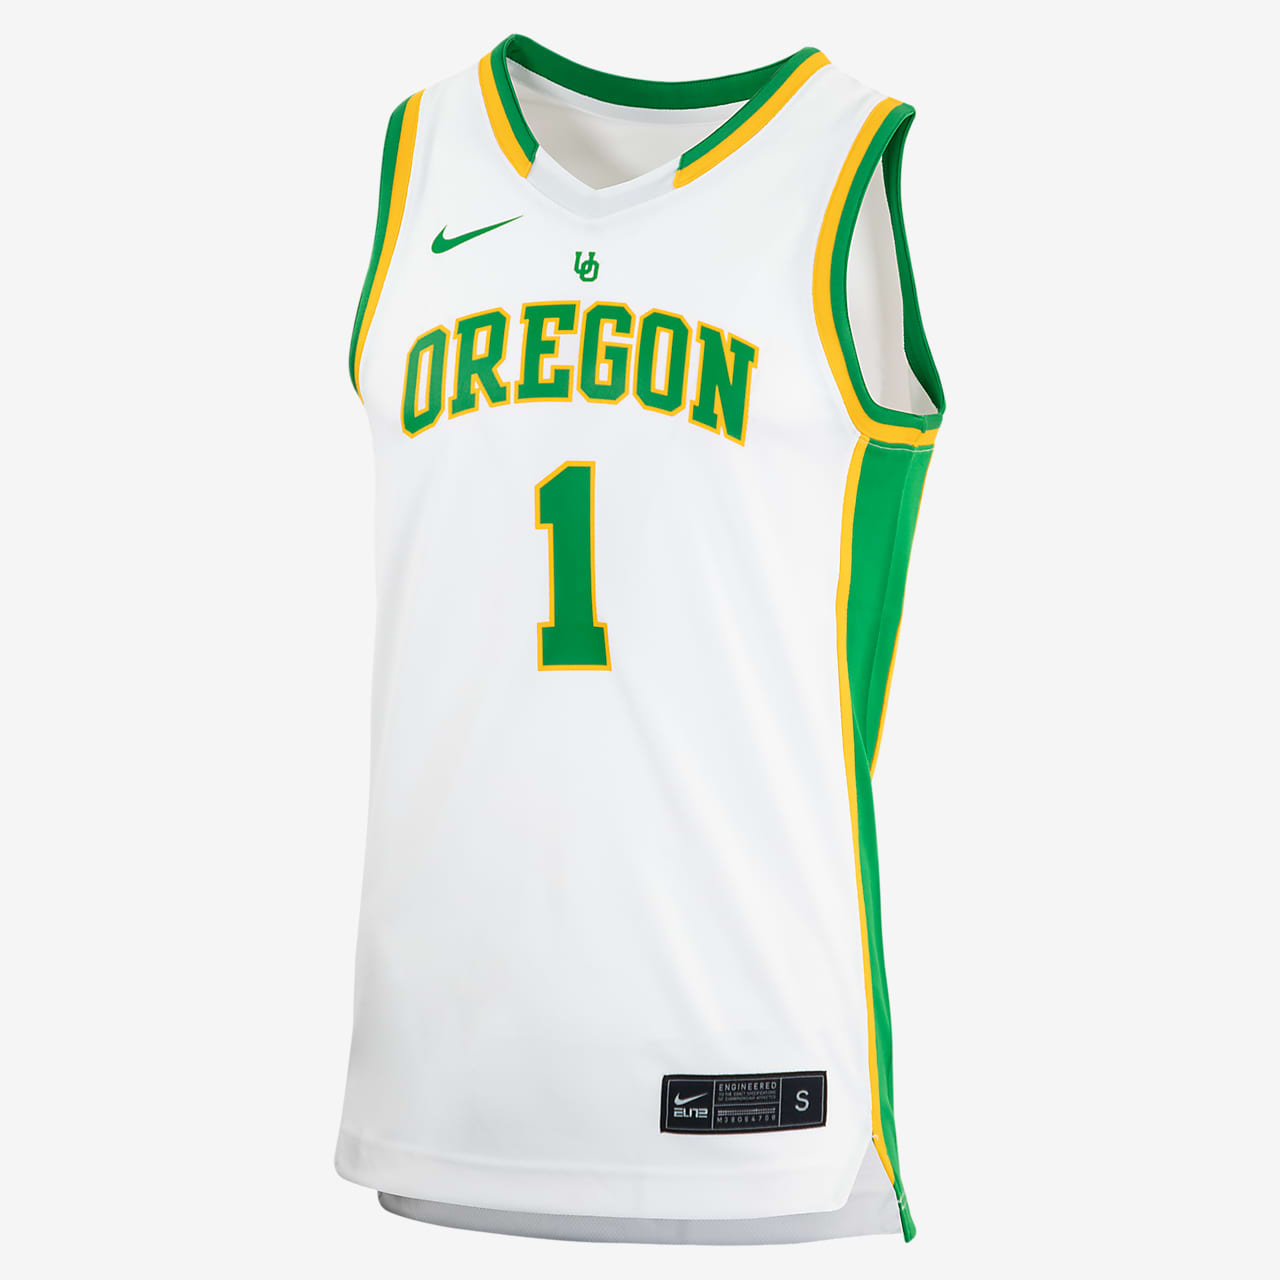 Nike College (Oregon) Basketball Jersey